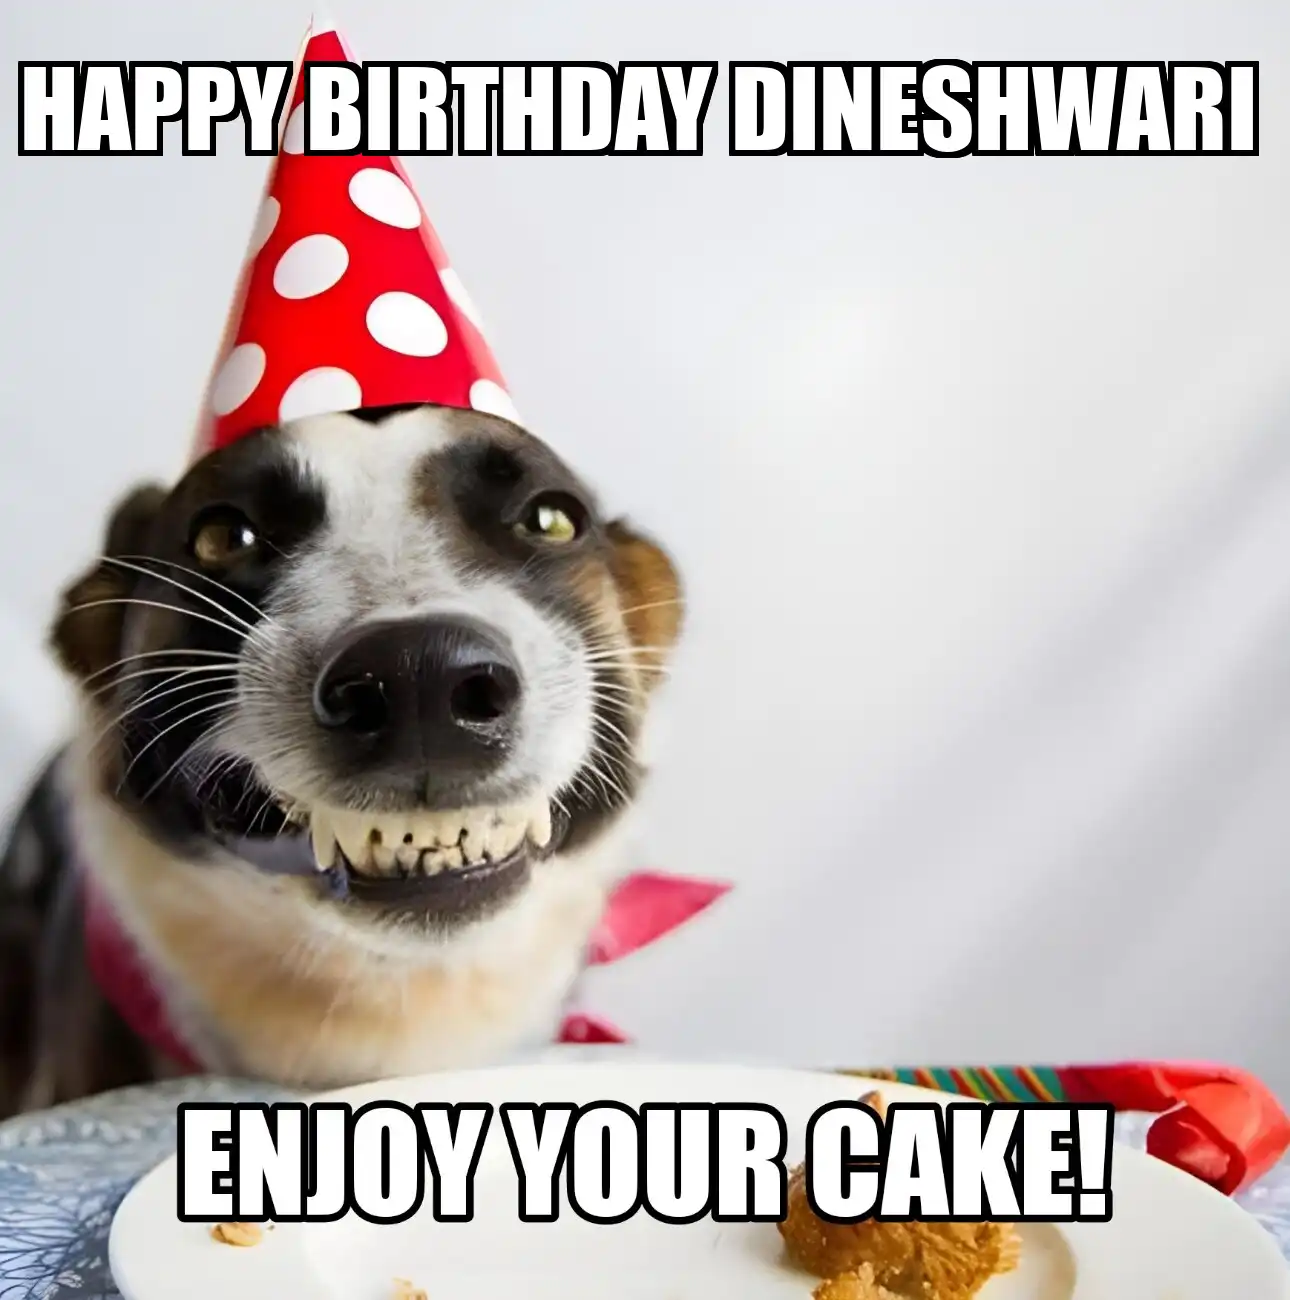 Happy Birthday Dineshwari Enjoy Your Cake Dog Meme